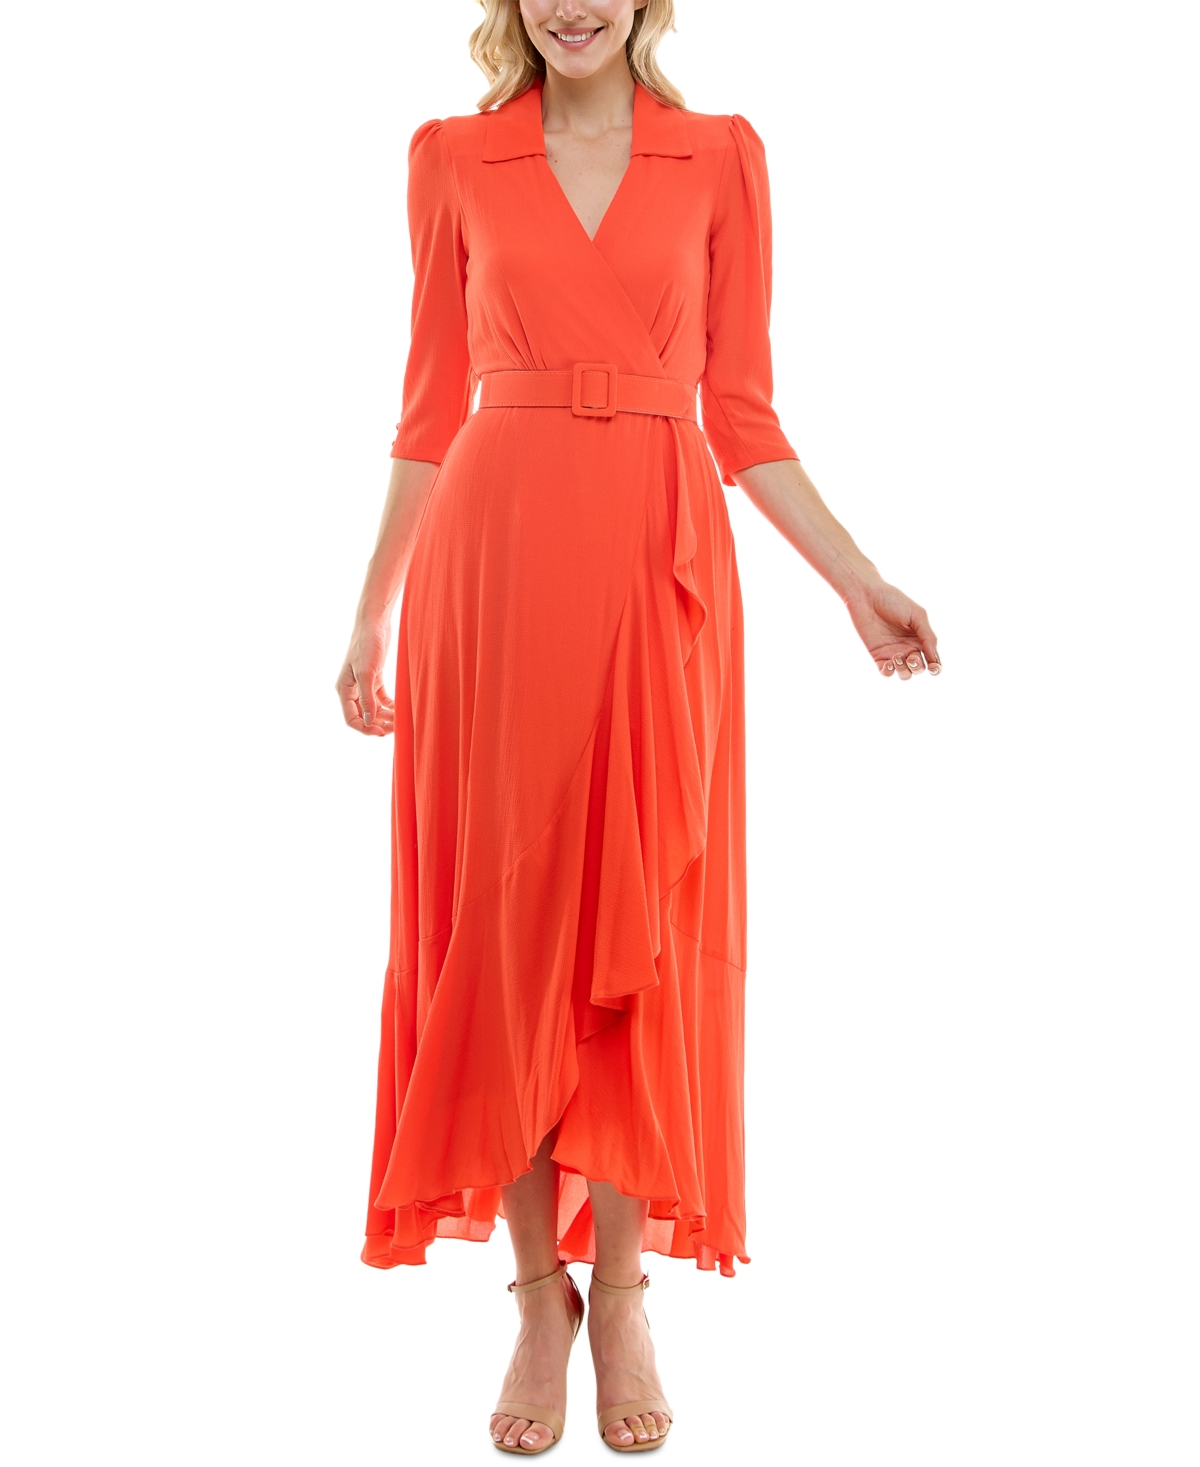 Women's Collared 3/4-Sleeve Ruffle-Trim Maxi Dress - Orange